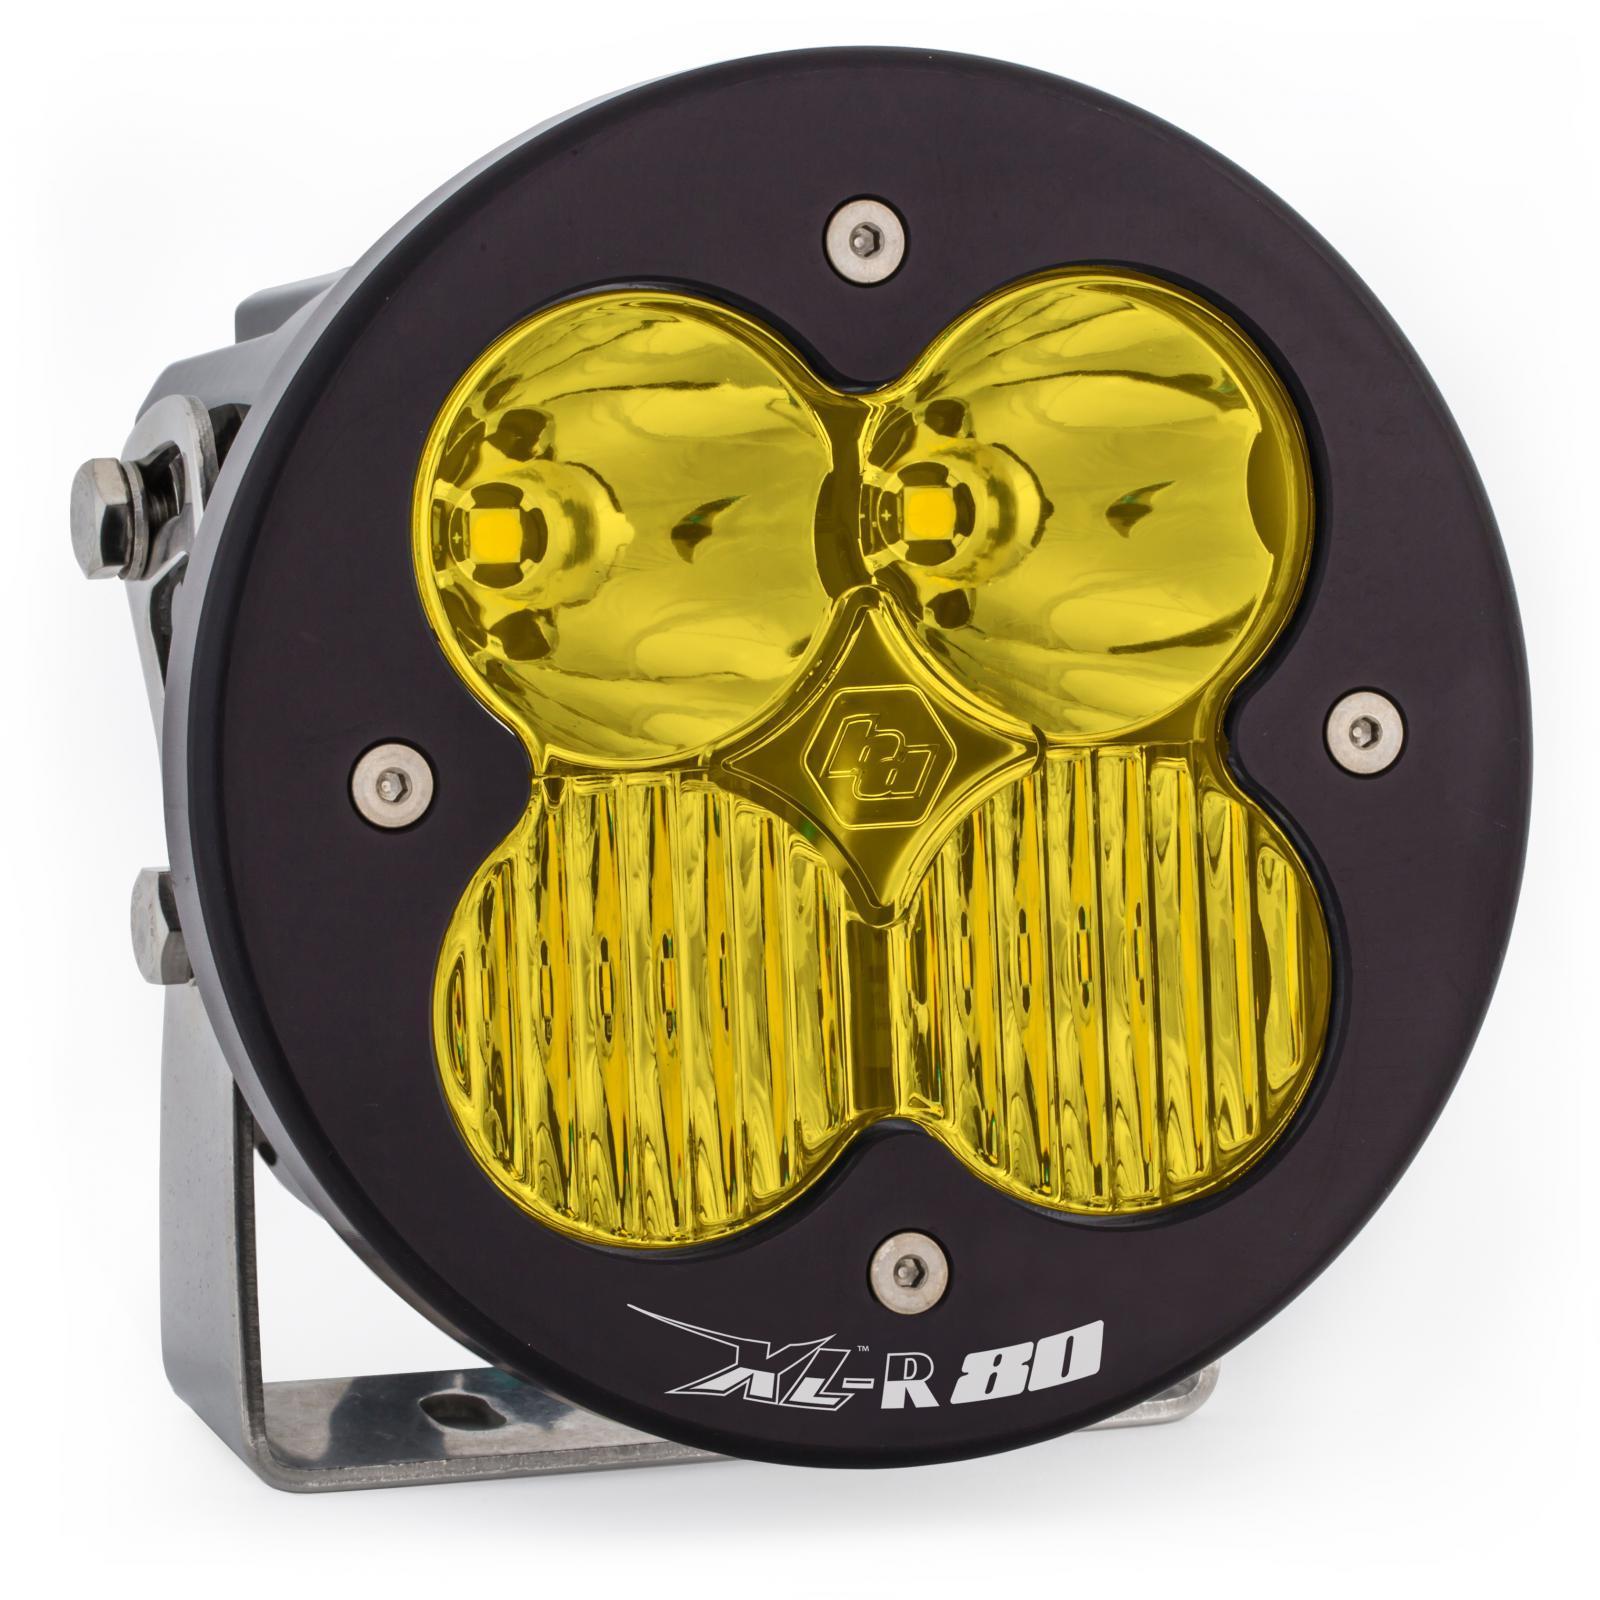 XL 80-R LED Light Lighting Baja Designs Amber Driving/Combo 